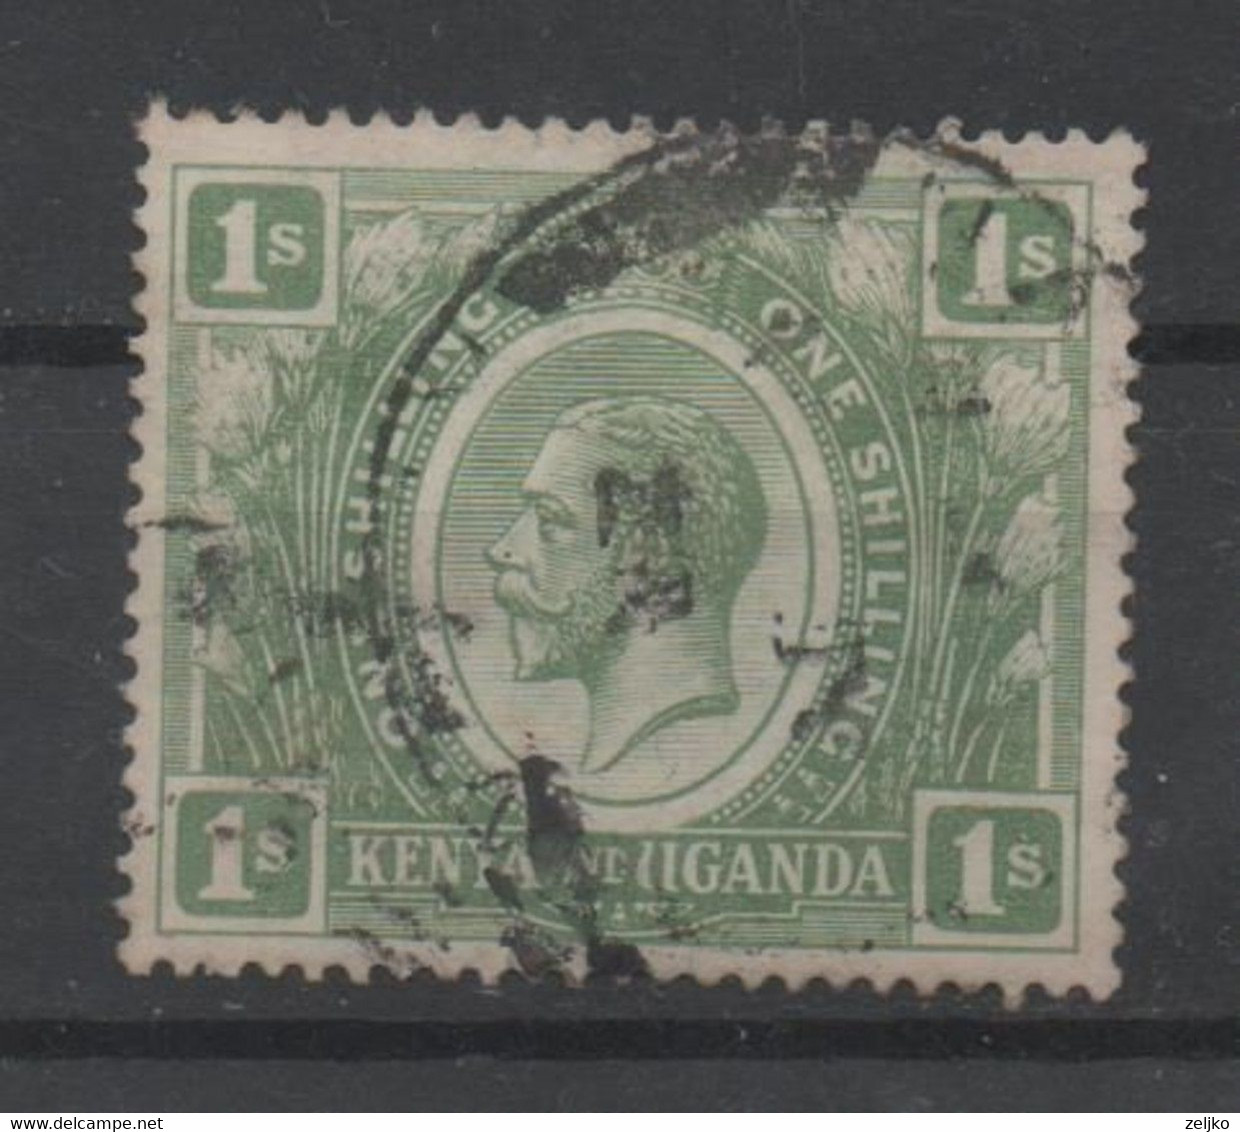 Kenya And Uganda, Used, 1922, Michel 10 - Kenya & Uganda